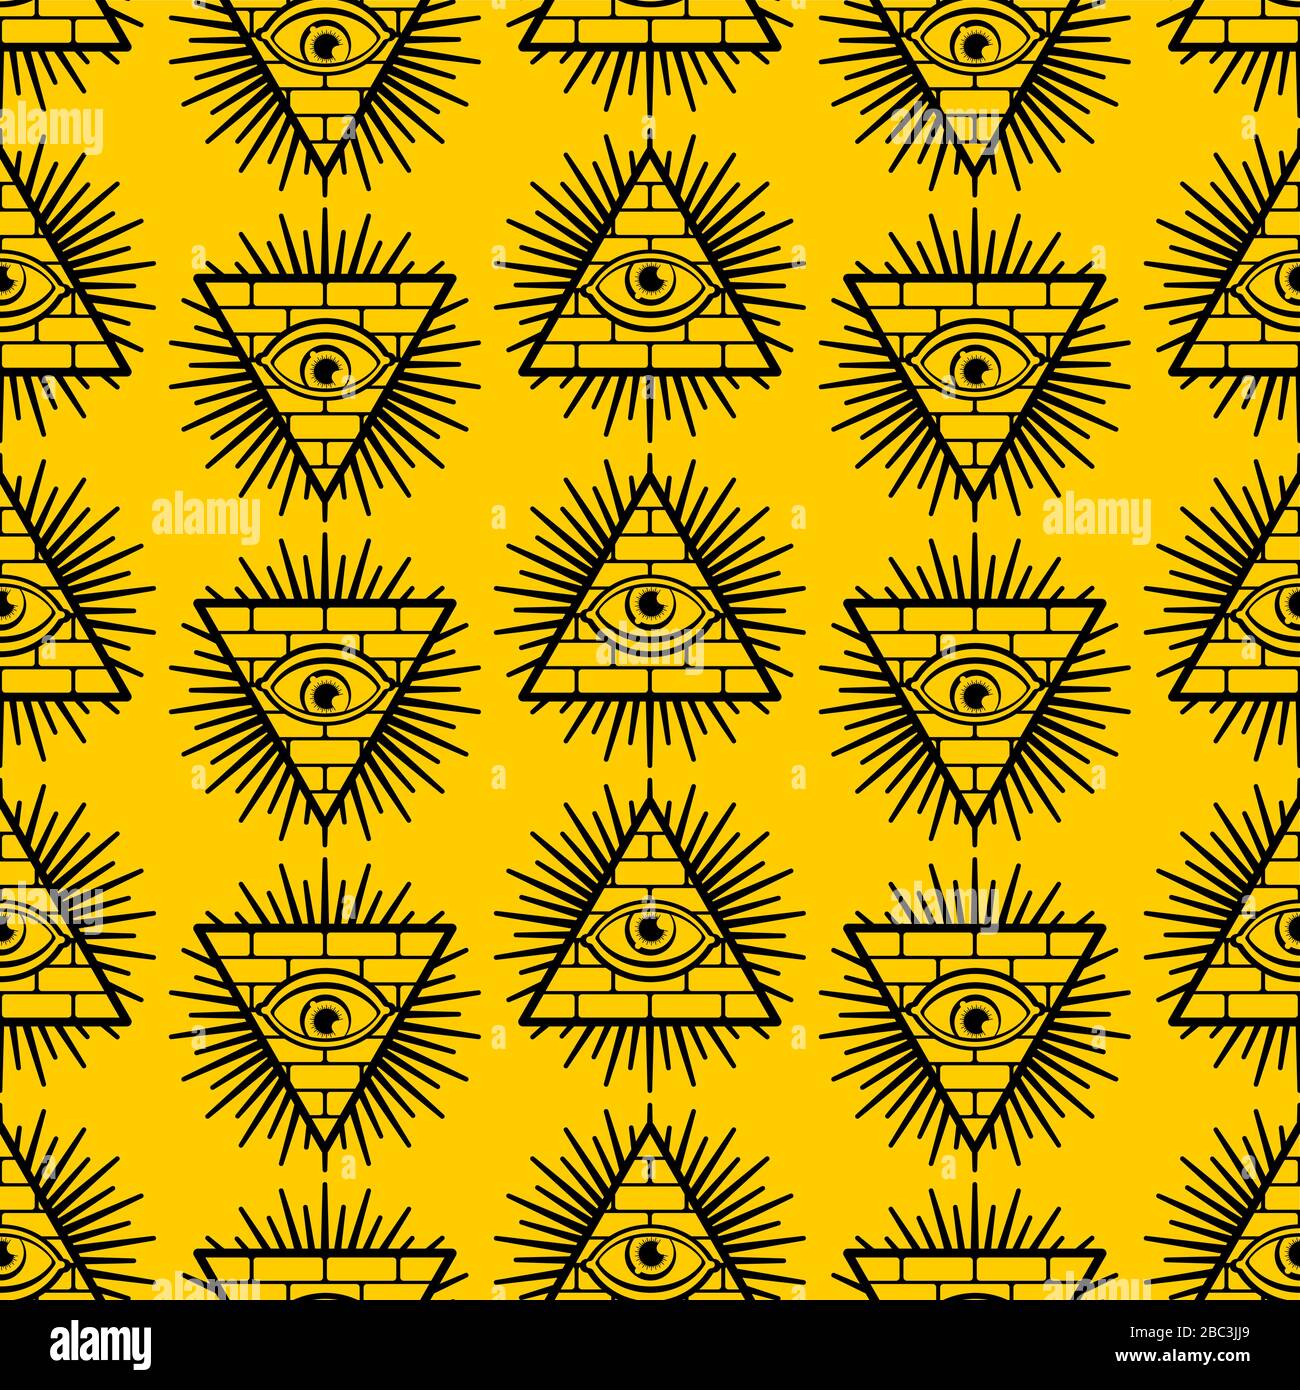 illuminati symbol wallpaper